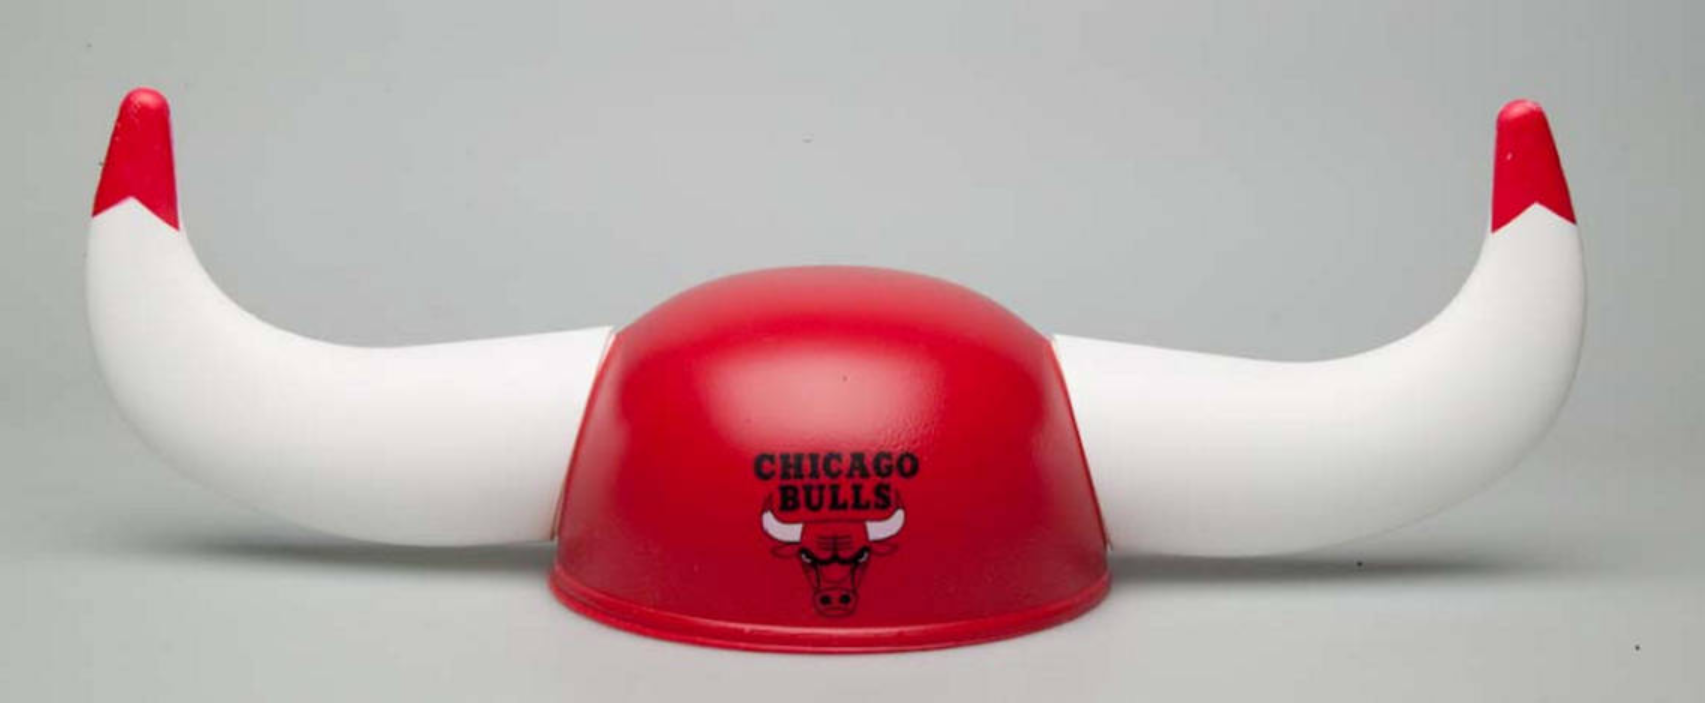 Chicago Bulls souvenir helmet